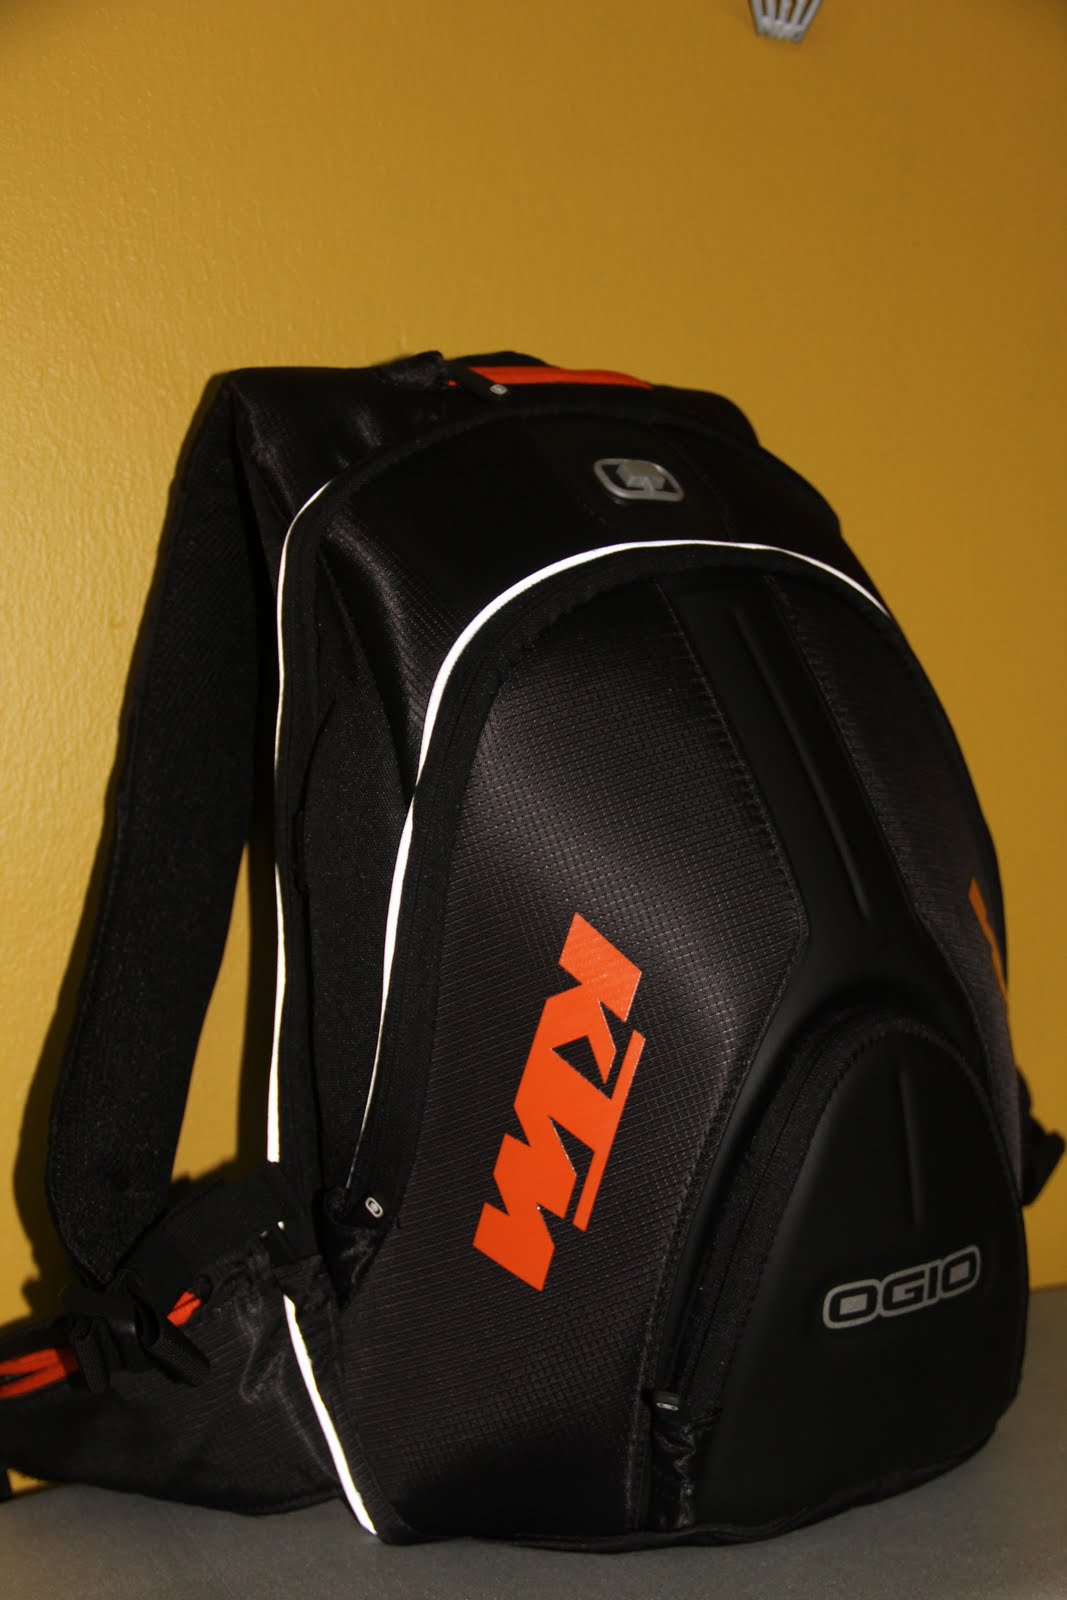 AjMoYe MotorSport Accessories: KTM Less Drag Backpack by Ogio